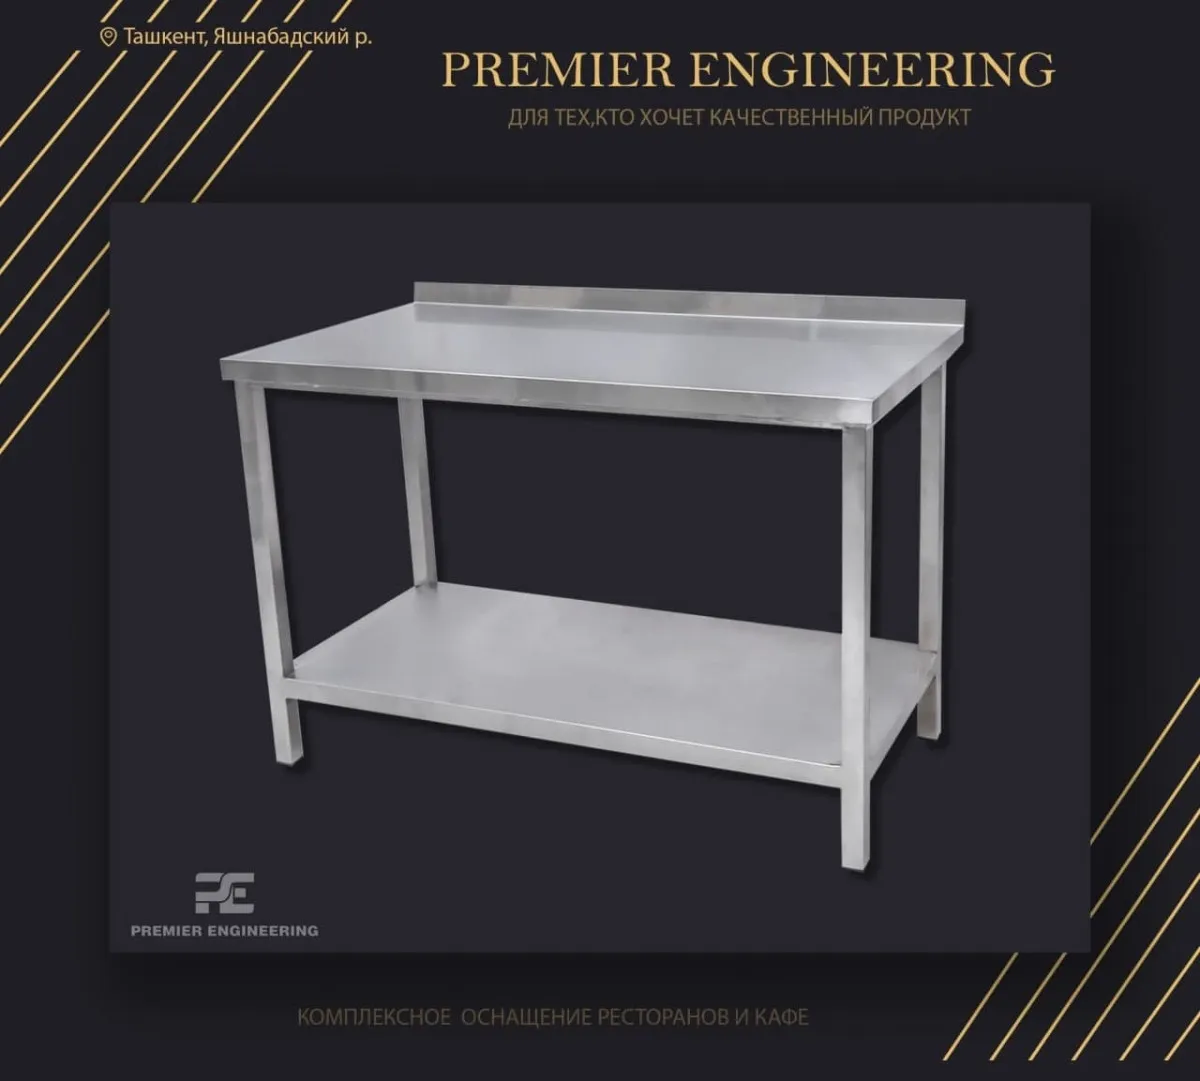 Пристенный стол Premier Engineering#1